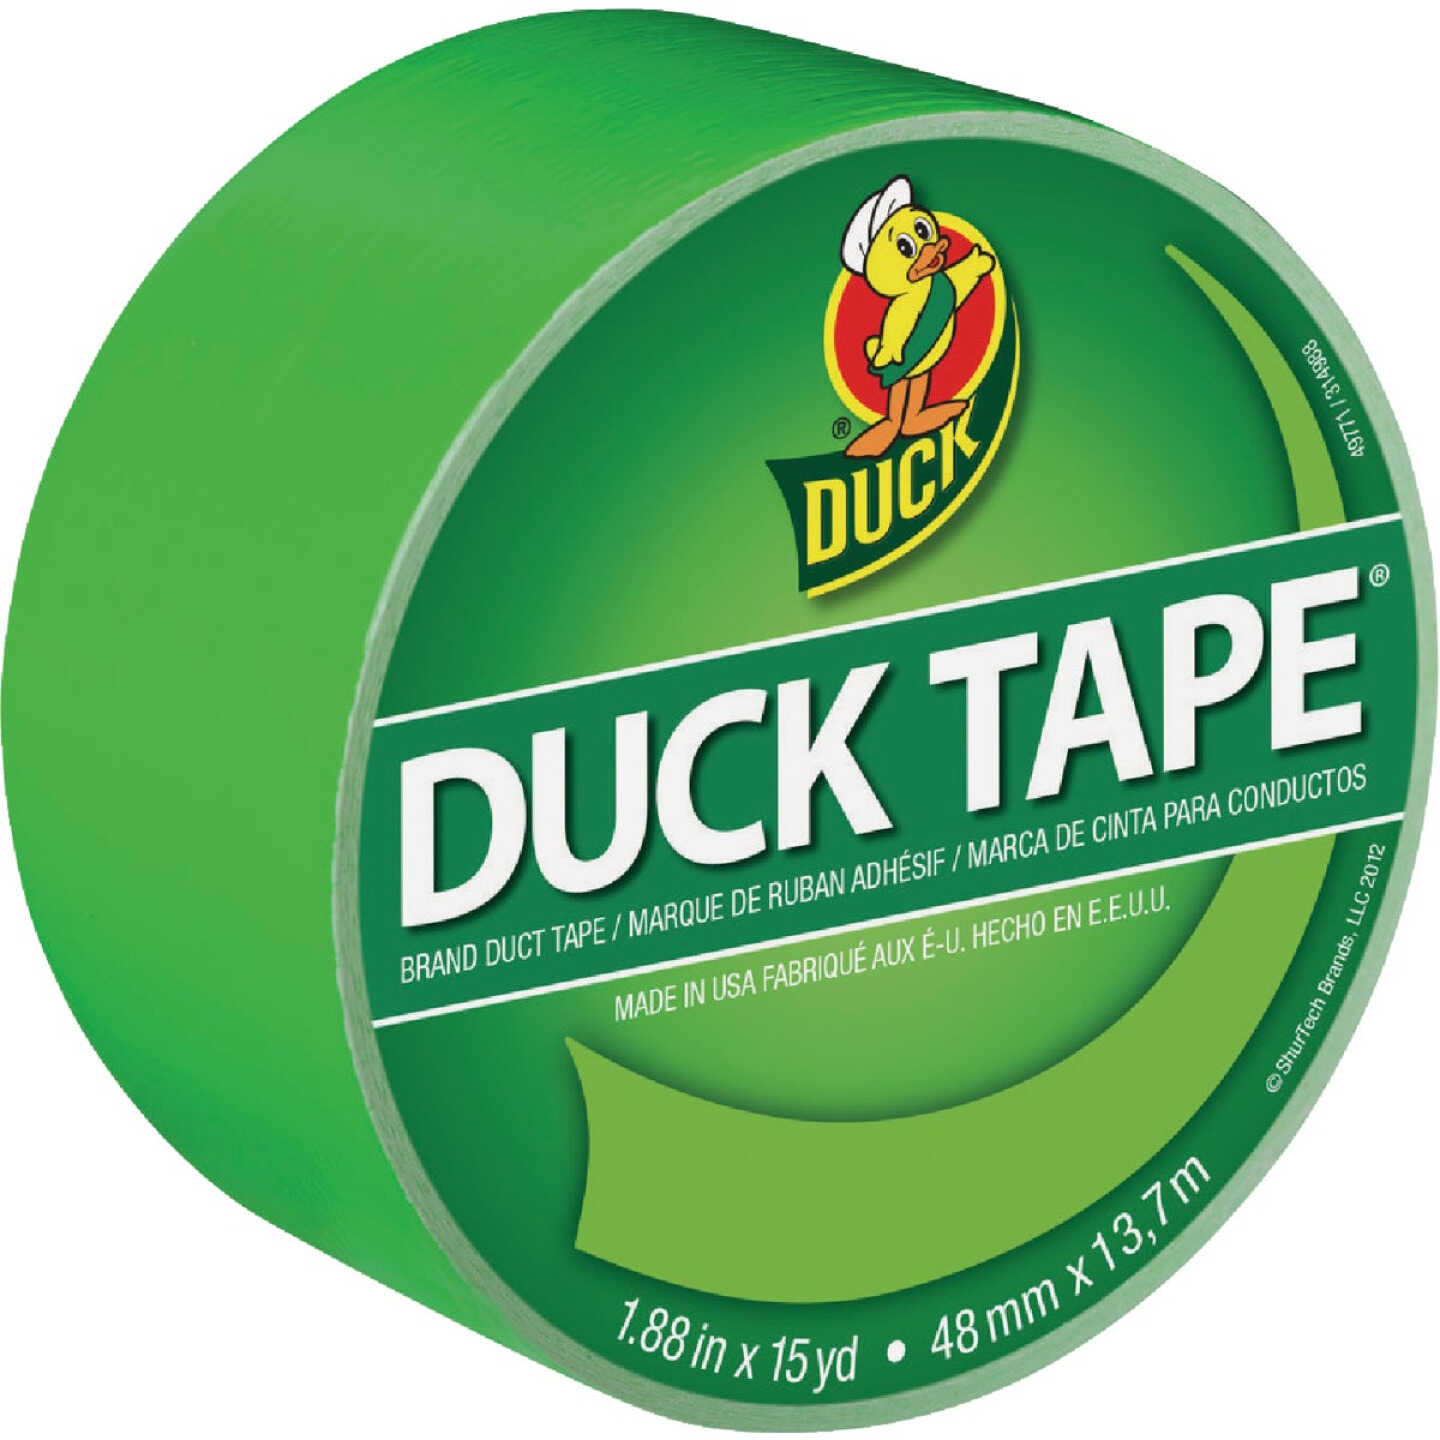 Cool Duct Tape Colors  Duct tape, Duct tape colors, Duck tape crafts